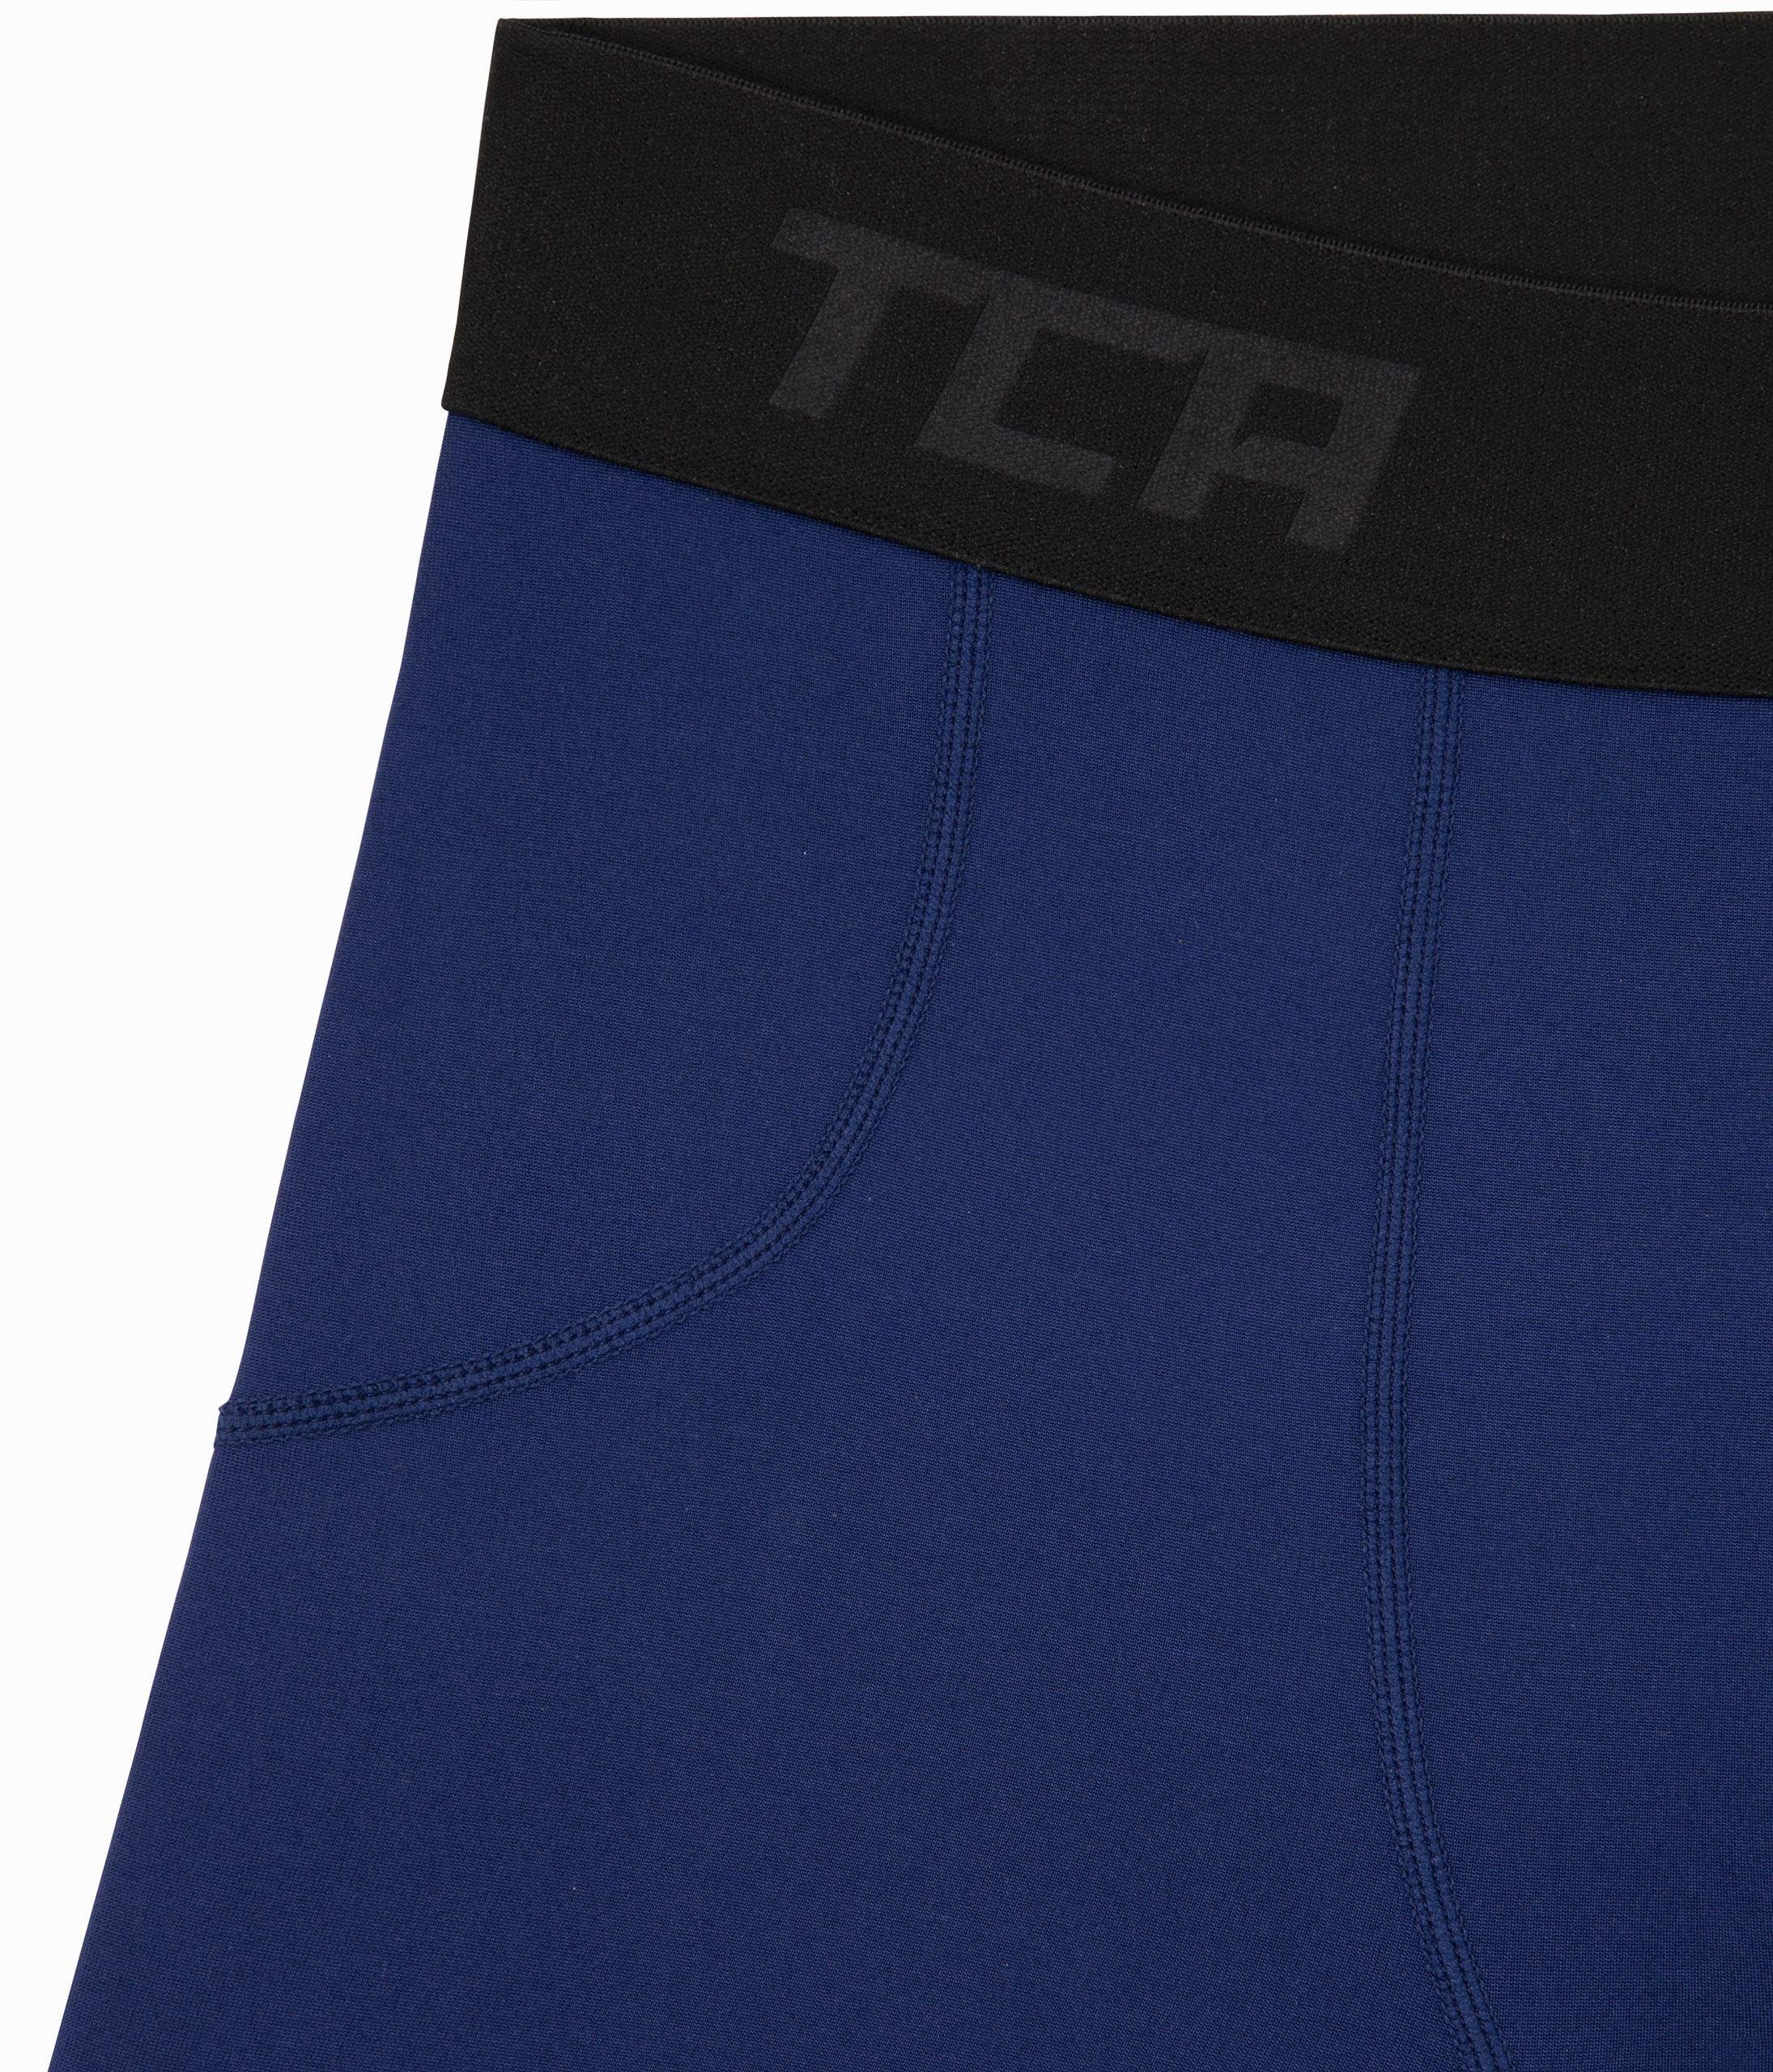 - TCA TCA Shorts Blau/Schwarz Unterziehshirt Kompressions SuperThermal Herren